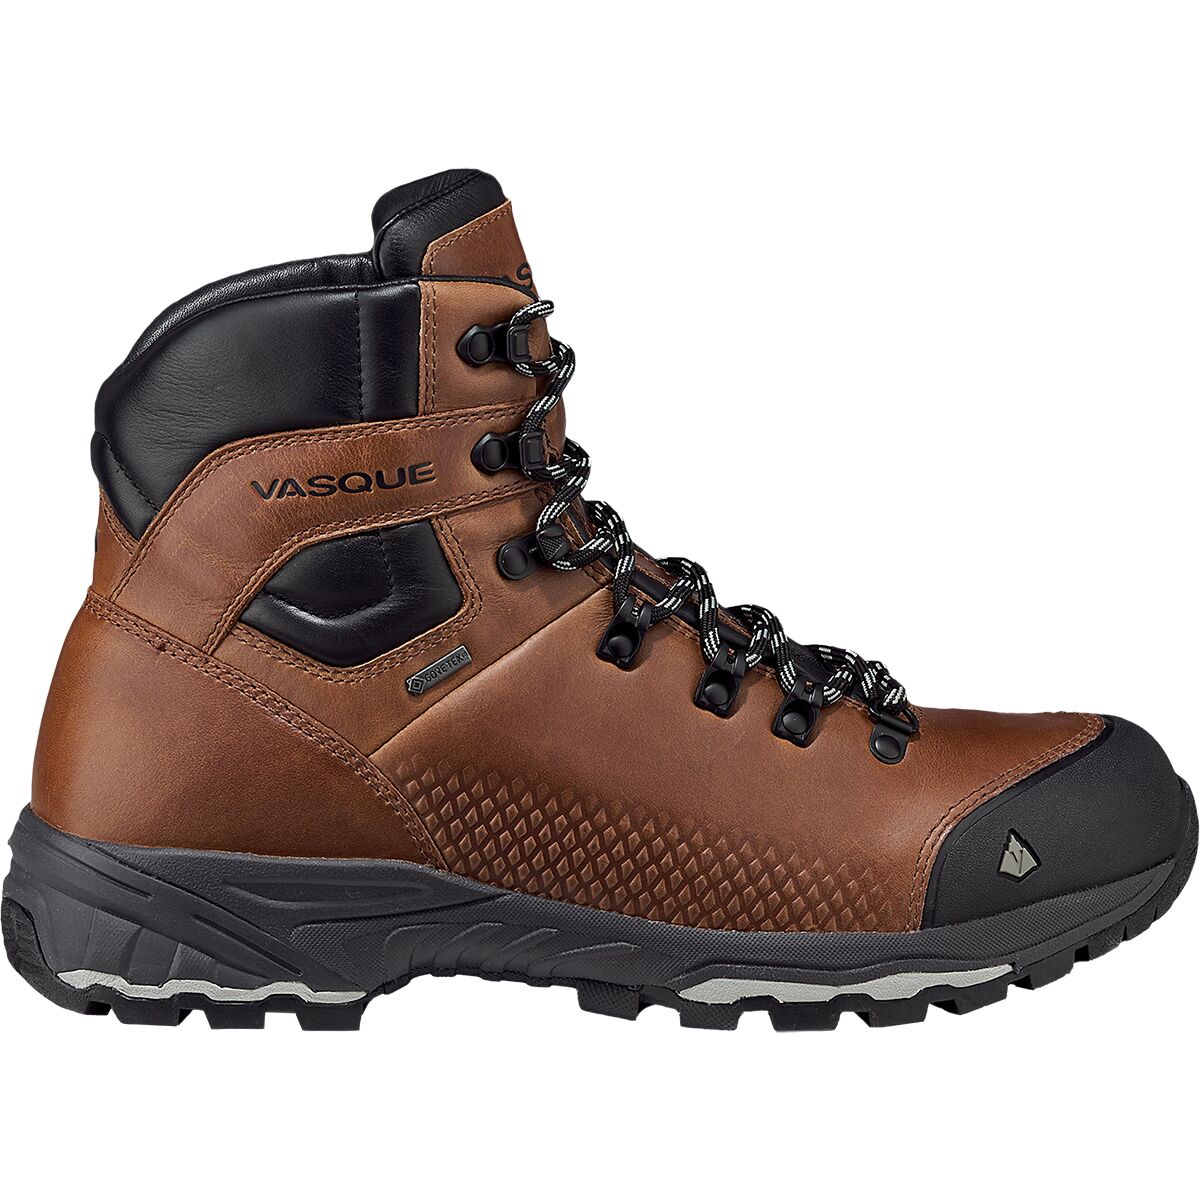 Vasque St Elias FG GTX Wide Hiking Boot - Men's